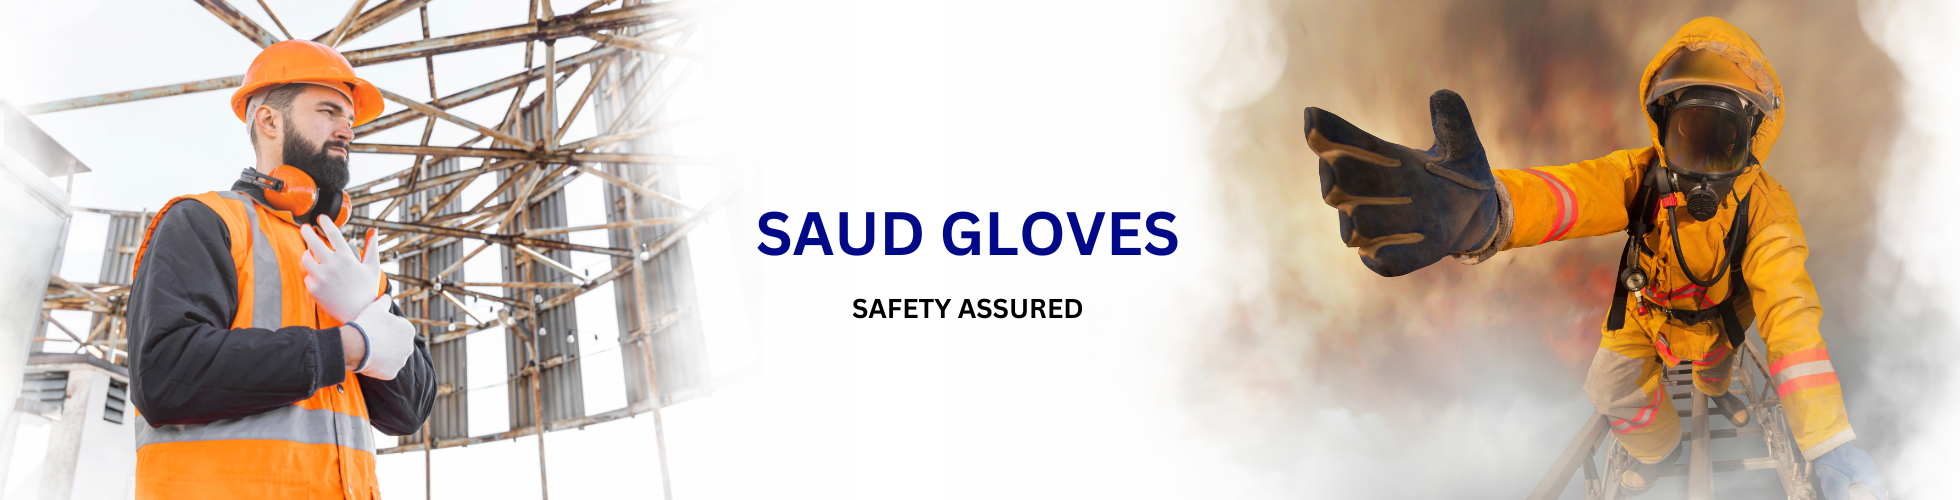 Manufacturer of welder gloves